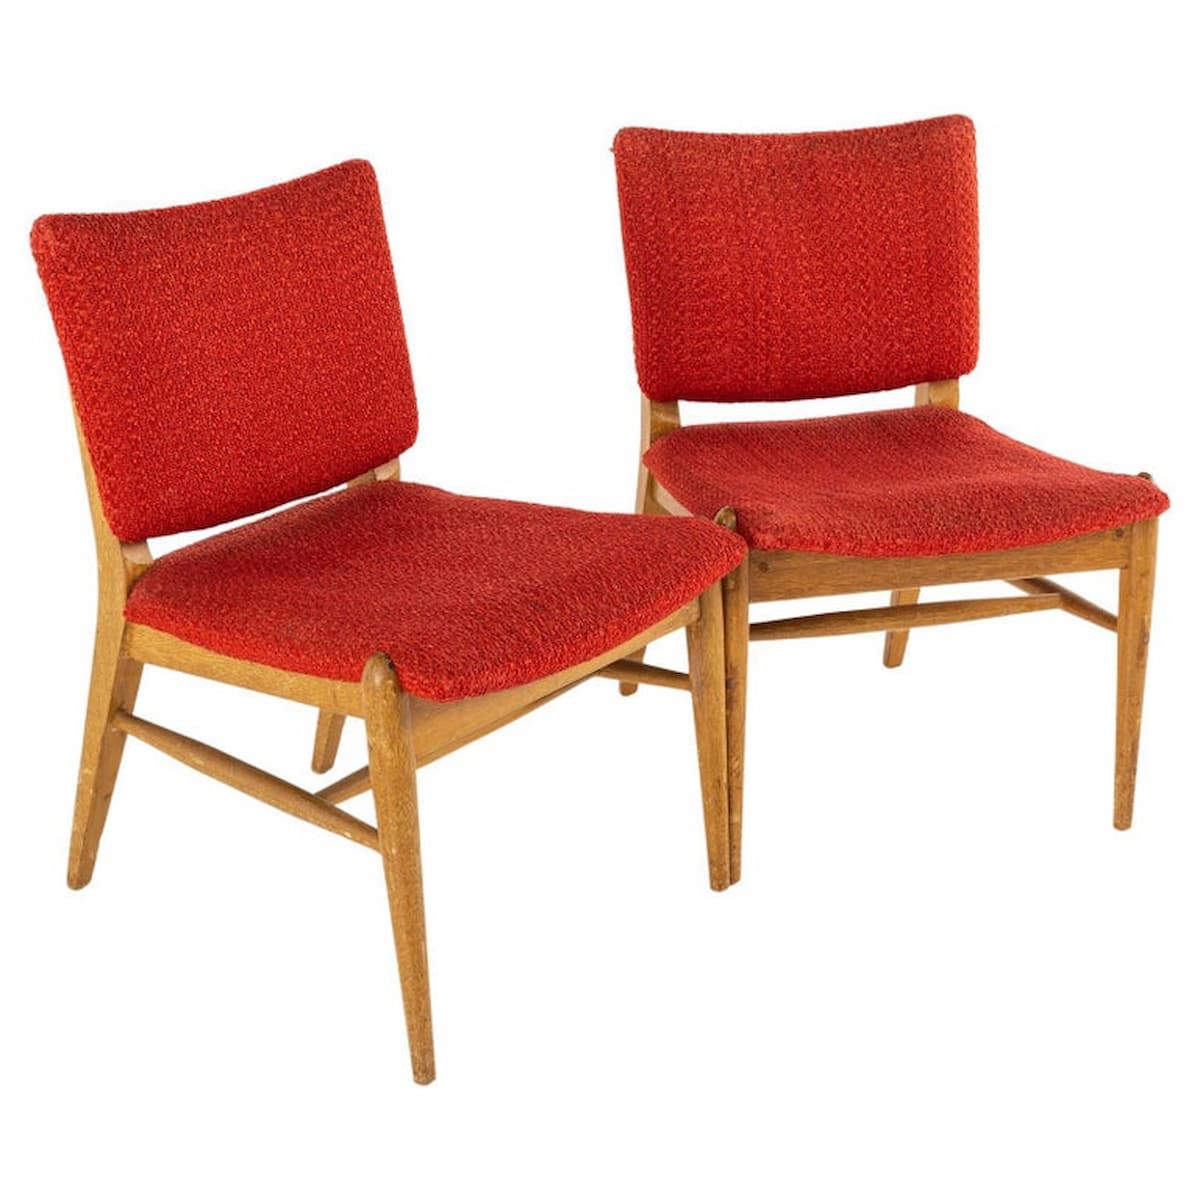 John Keal for Brown Saltman Mid Century Mahogany Dining Chairs - Pair